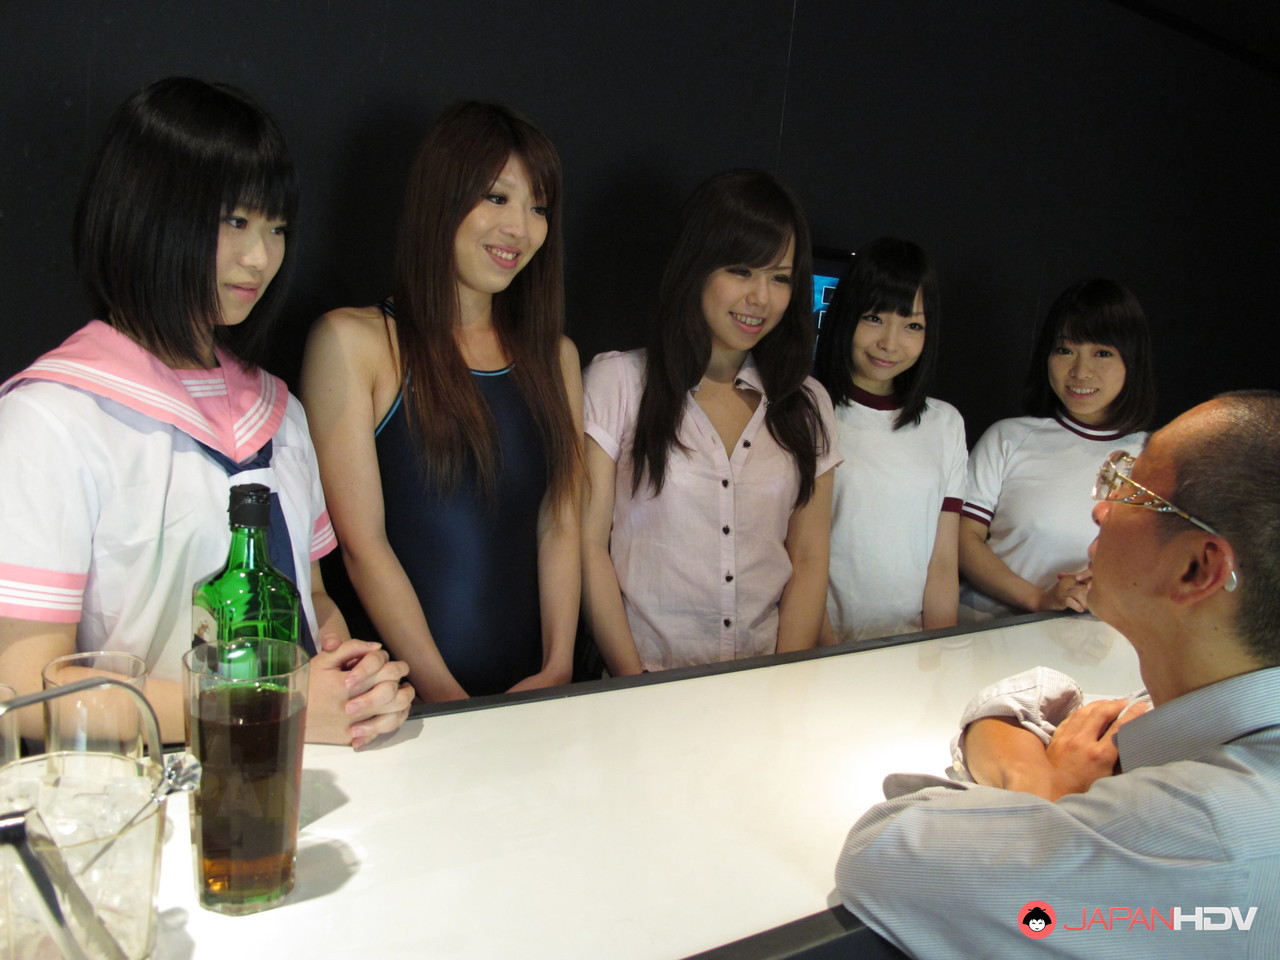 Cute Japanese teens participate in a wild Asian orgy in the nightclub foto pornográfica #424451908 | Japan HDV Pics, Mio Kosaki, Seiko Ida, Yuri Sakura, Japanese, pornografia móvel